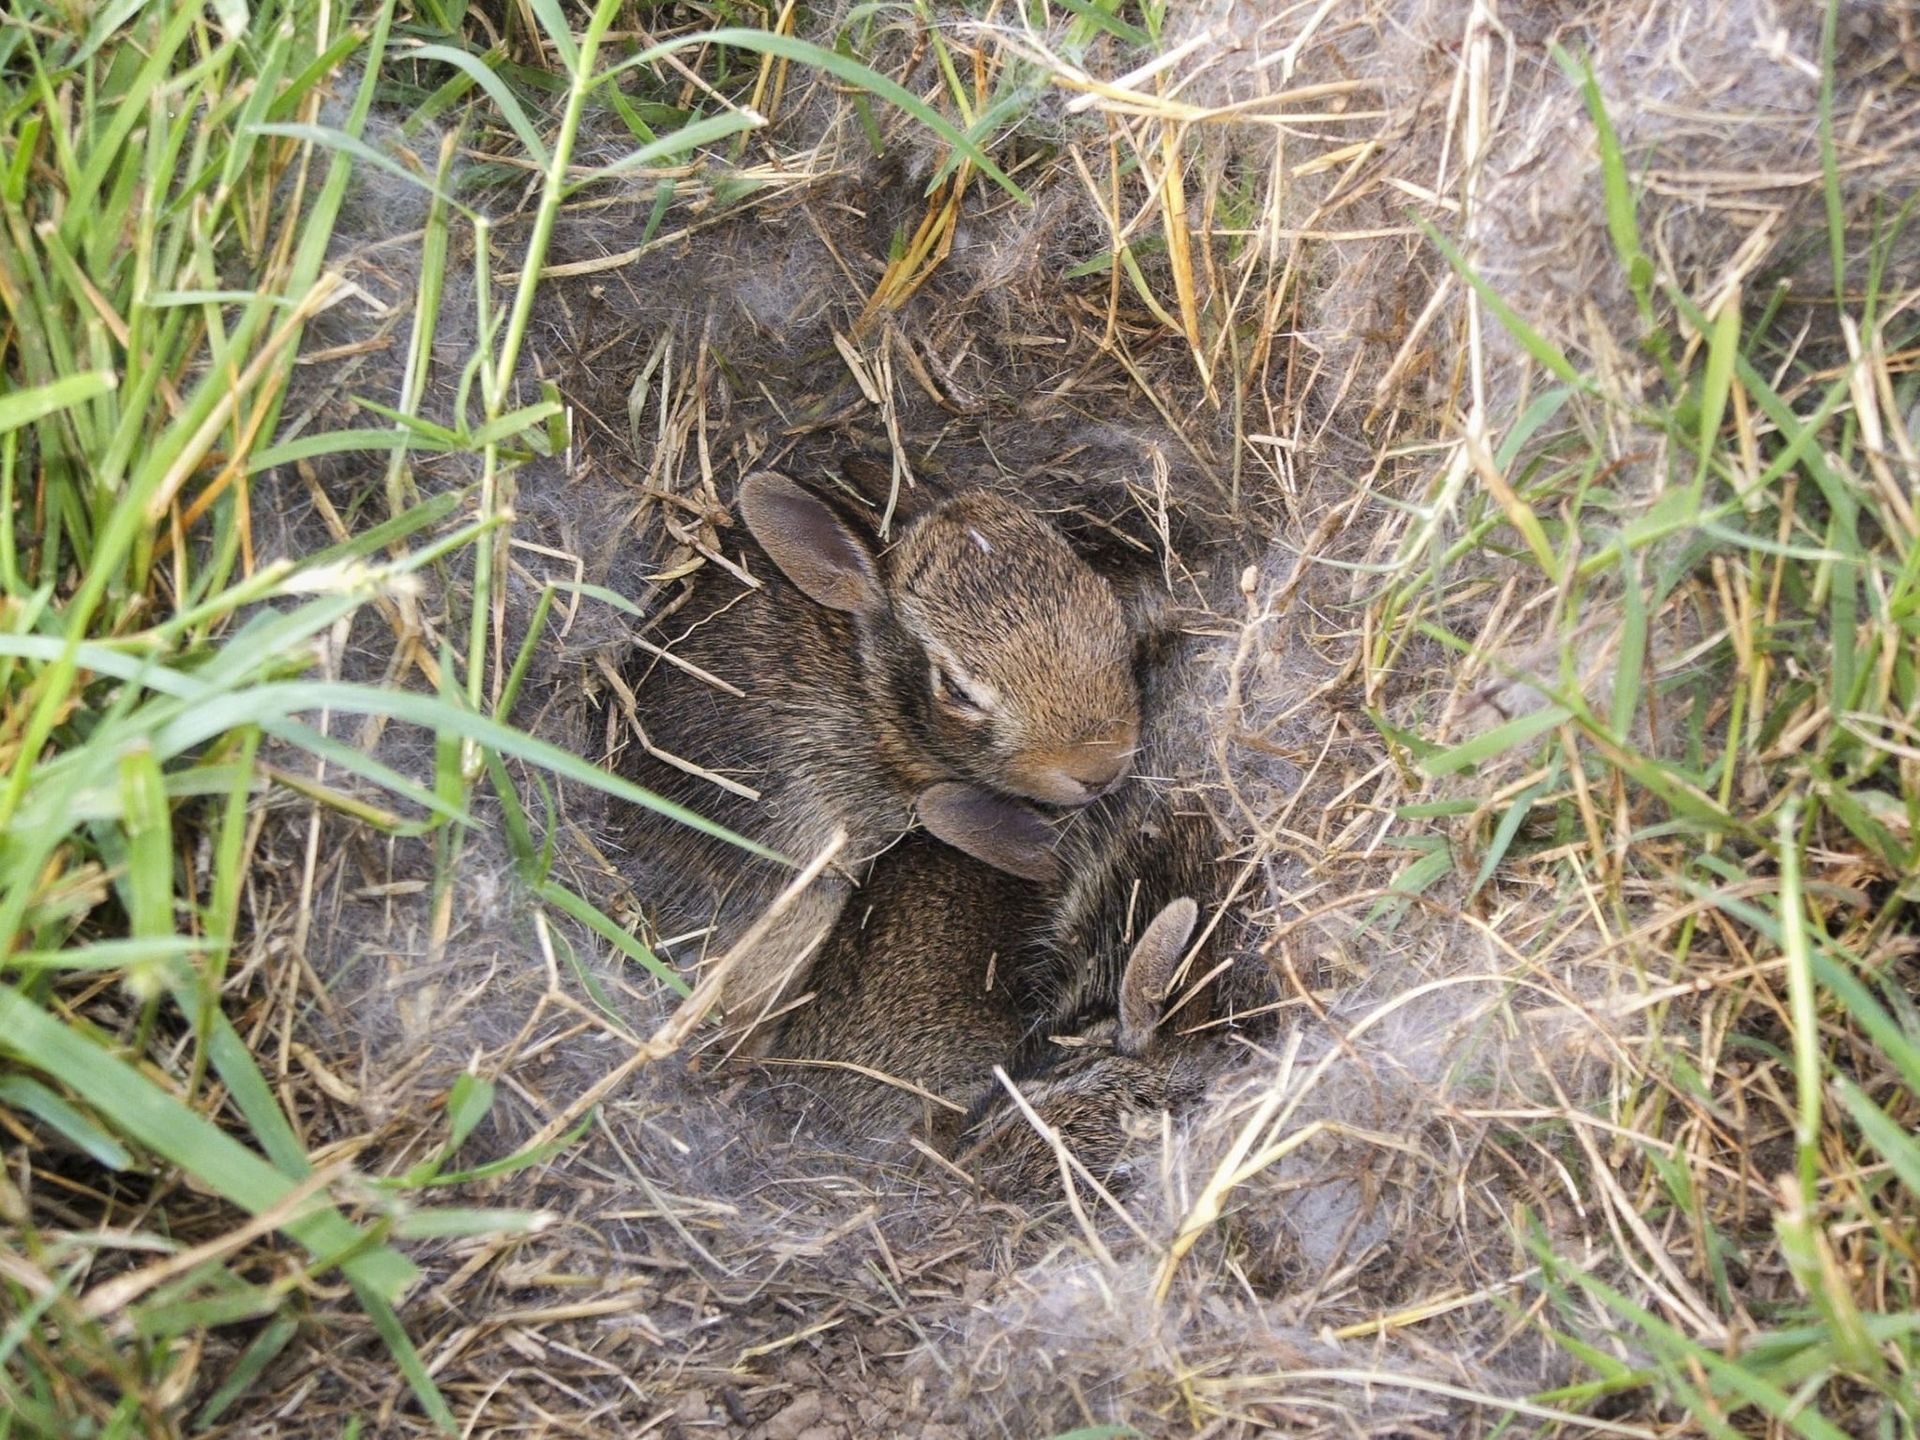 rabbit nest with a baby rabbit